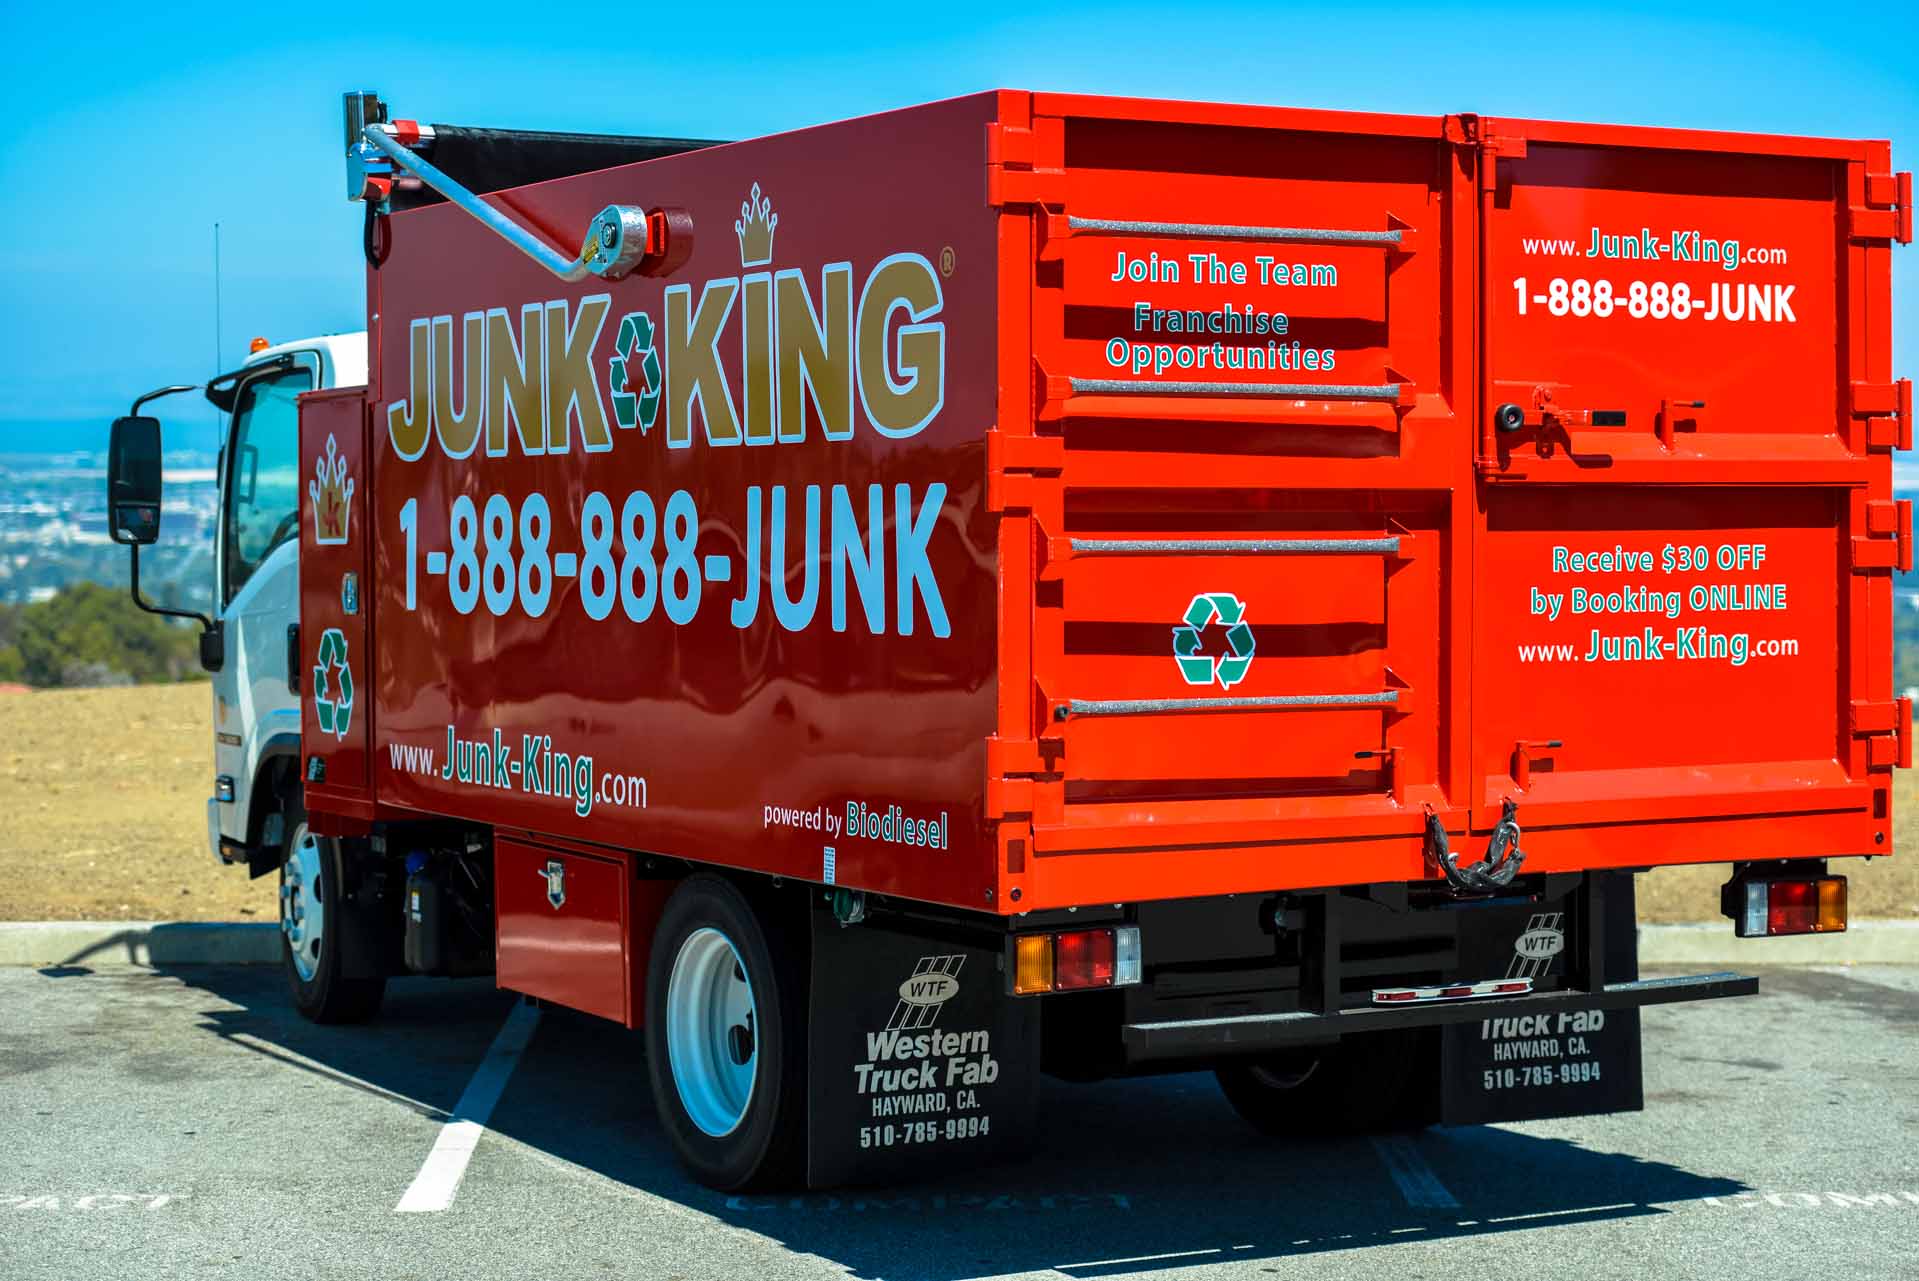 Junk King Franchise Owner,  Jim & Jennifer.